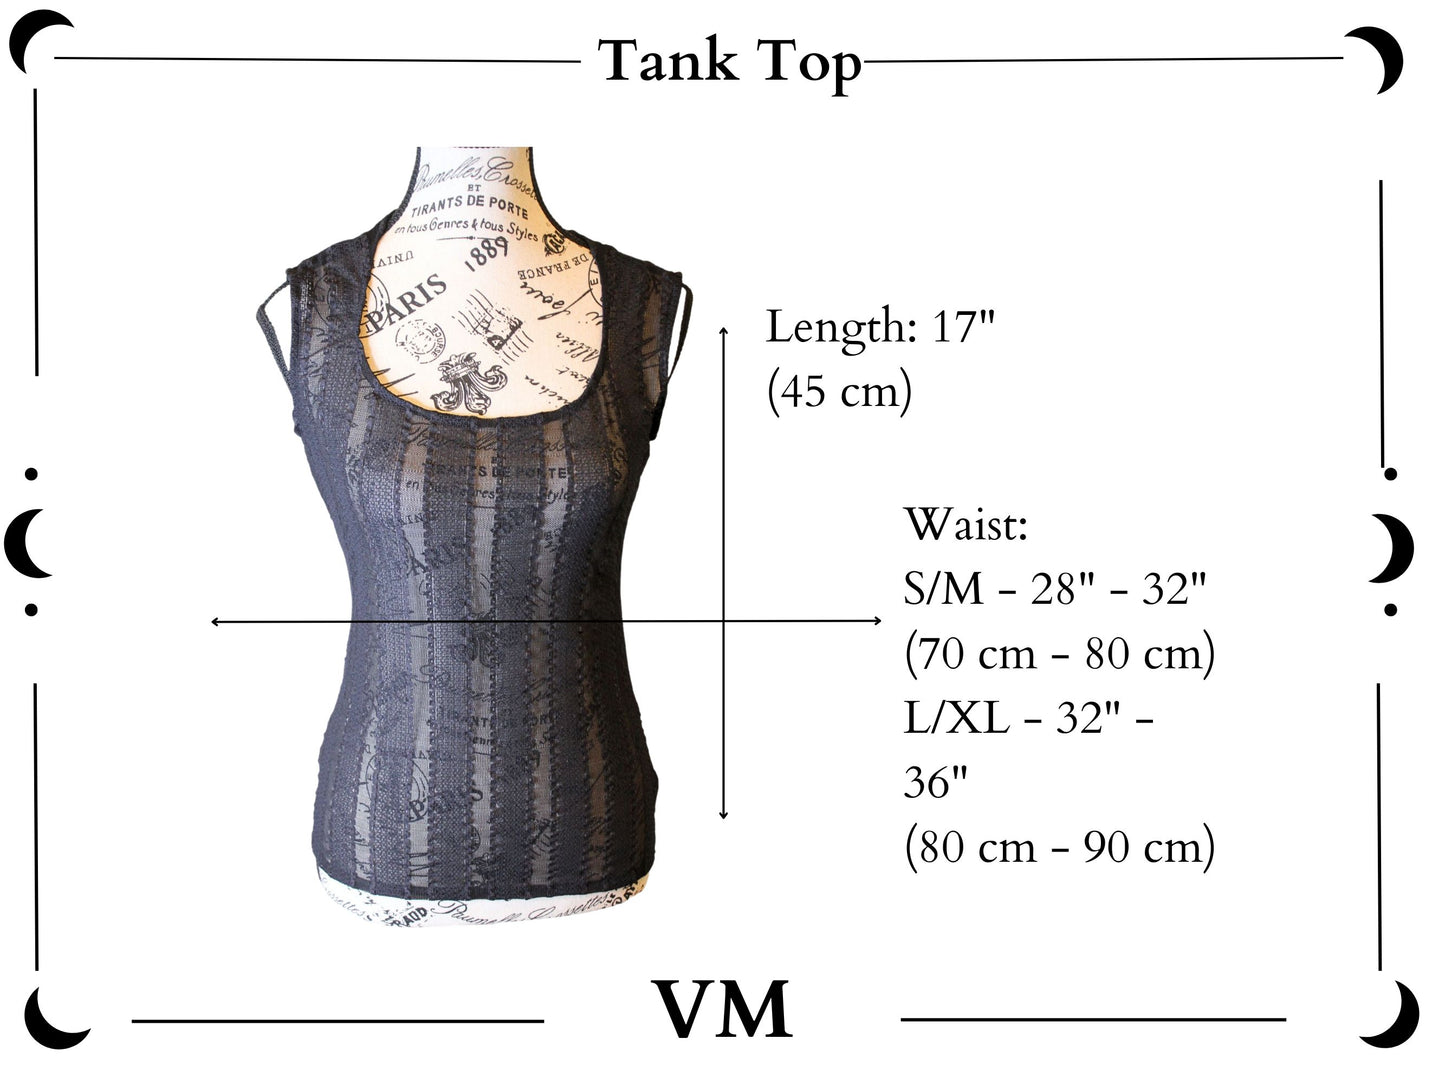 The VM Lace Tank